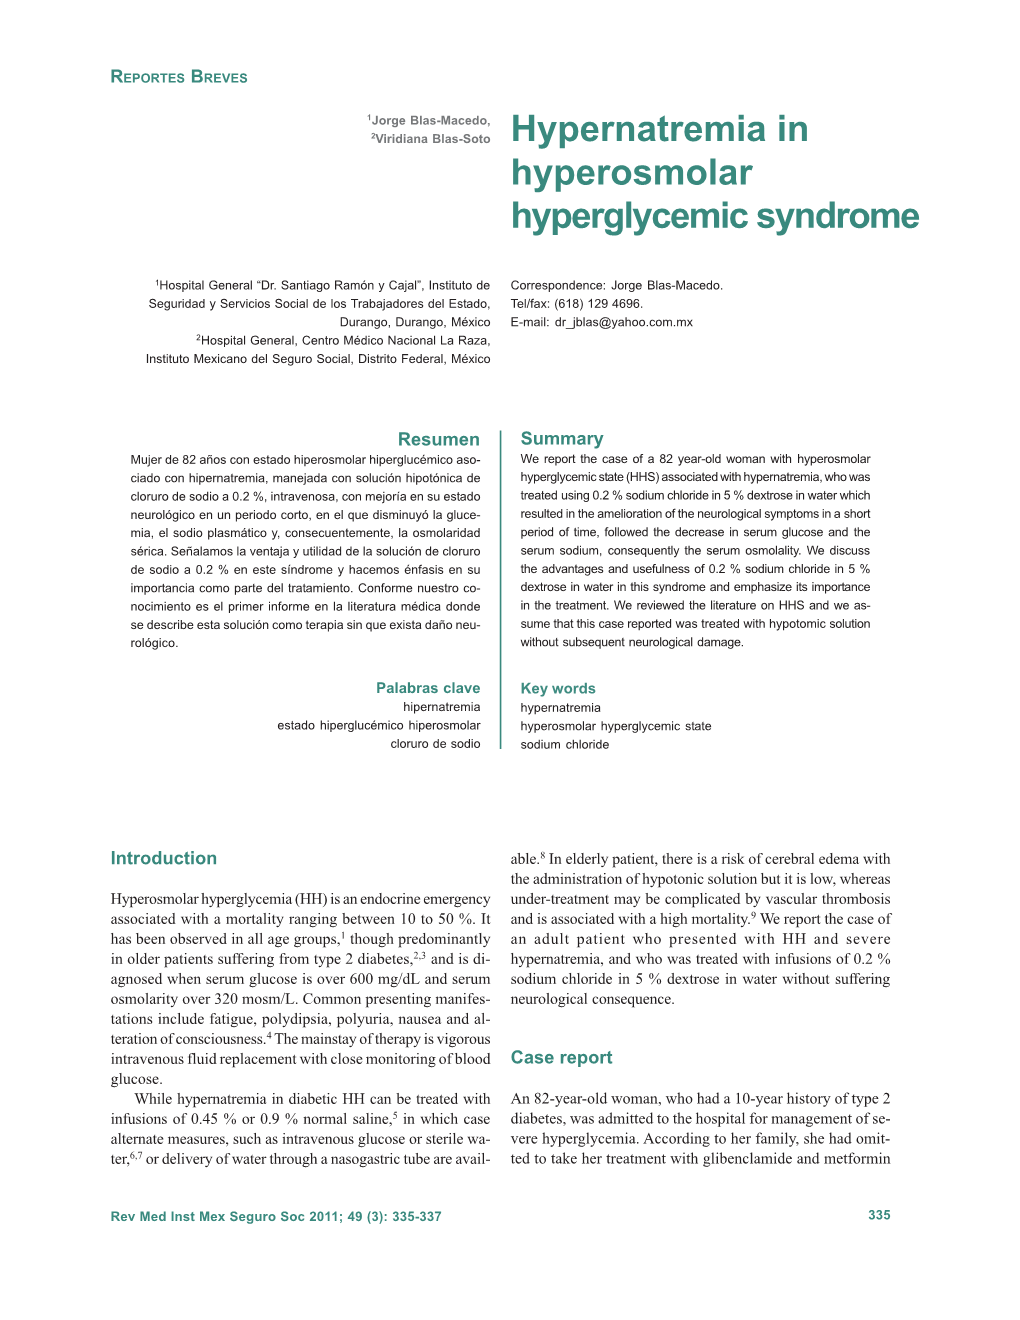 Hypernatremia in Hyperosmolar Hyperglycemic Syndrome